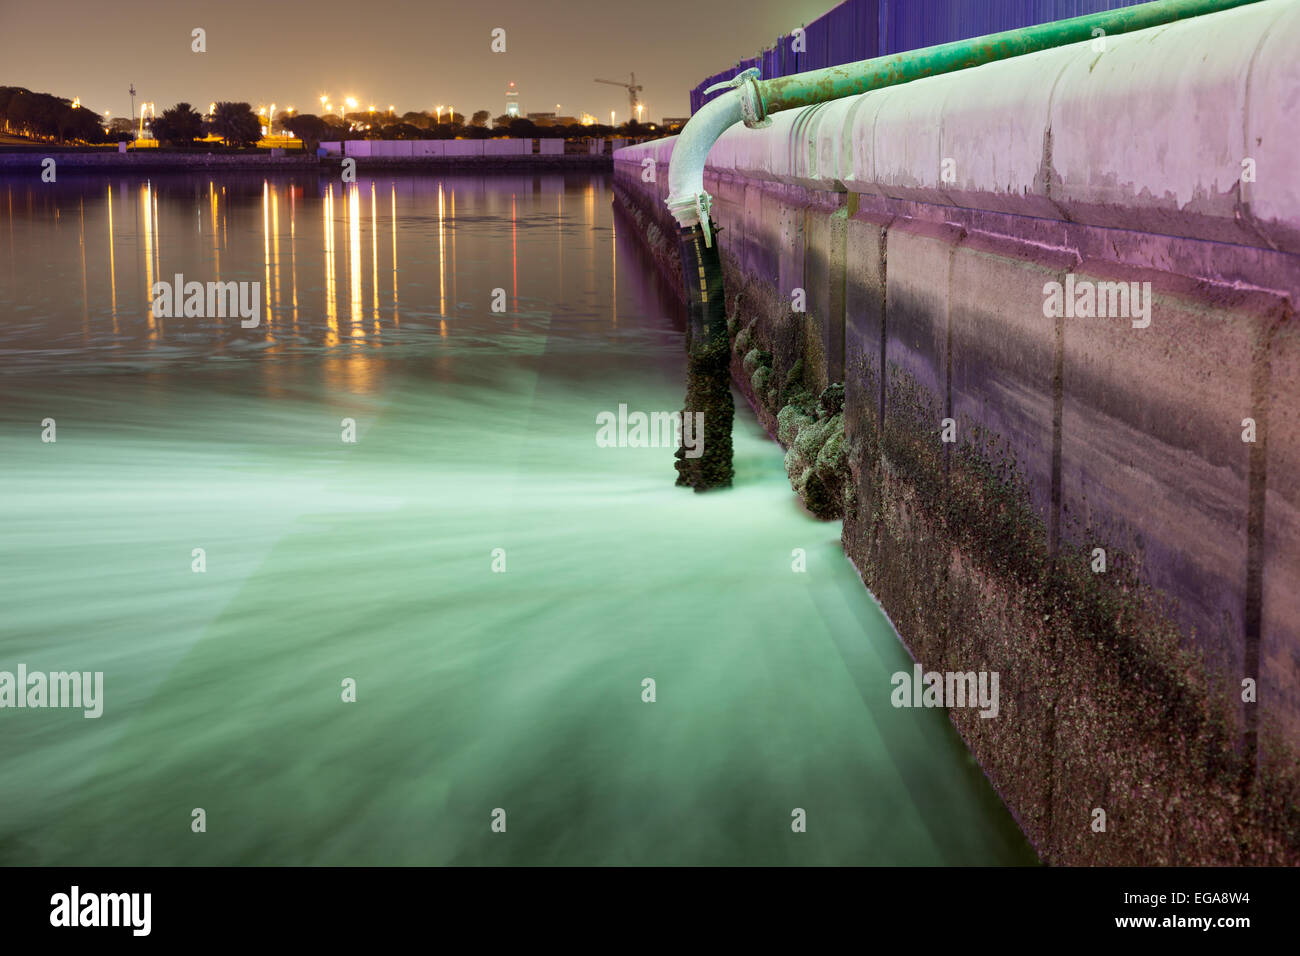 Sewage pipe discharging water into a river at night. Dubai Creek, UAE Stock Photo